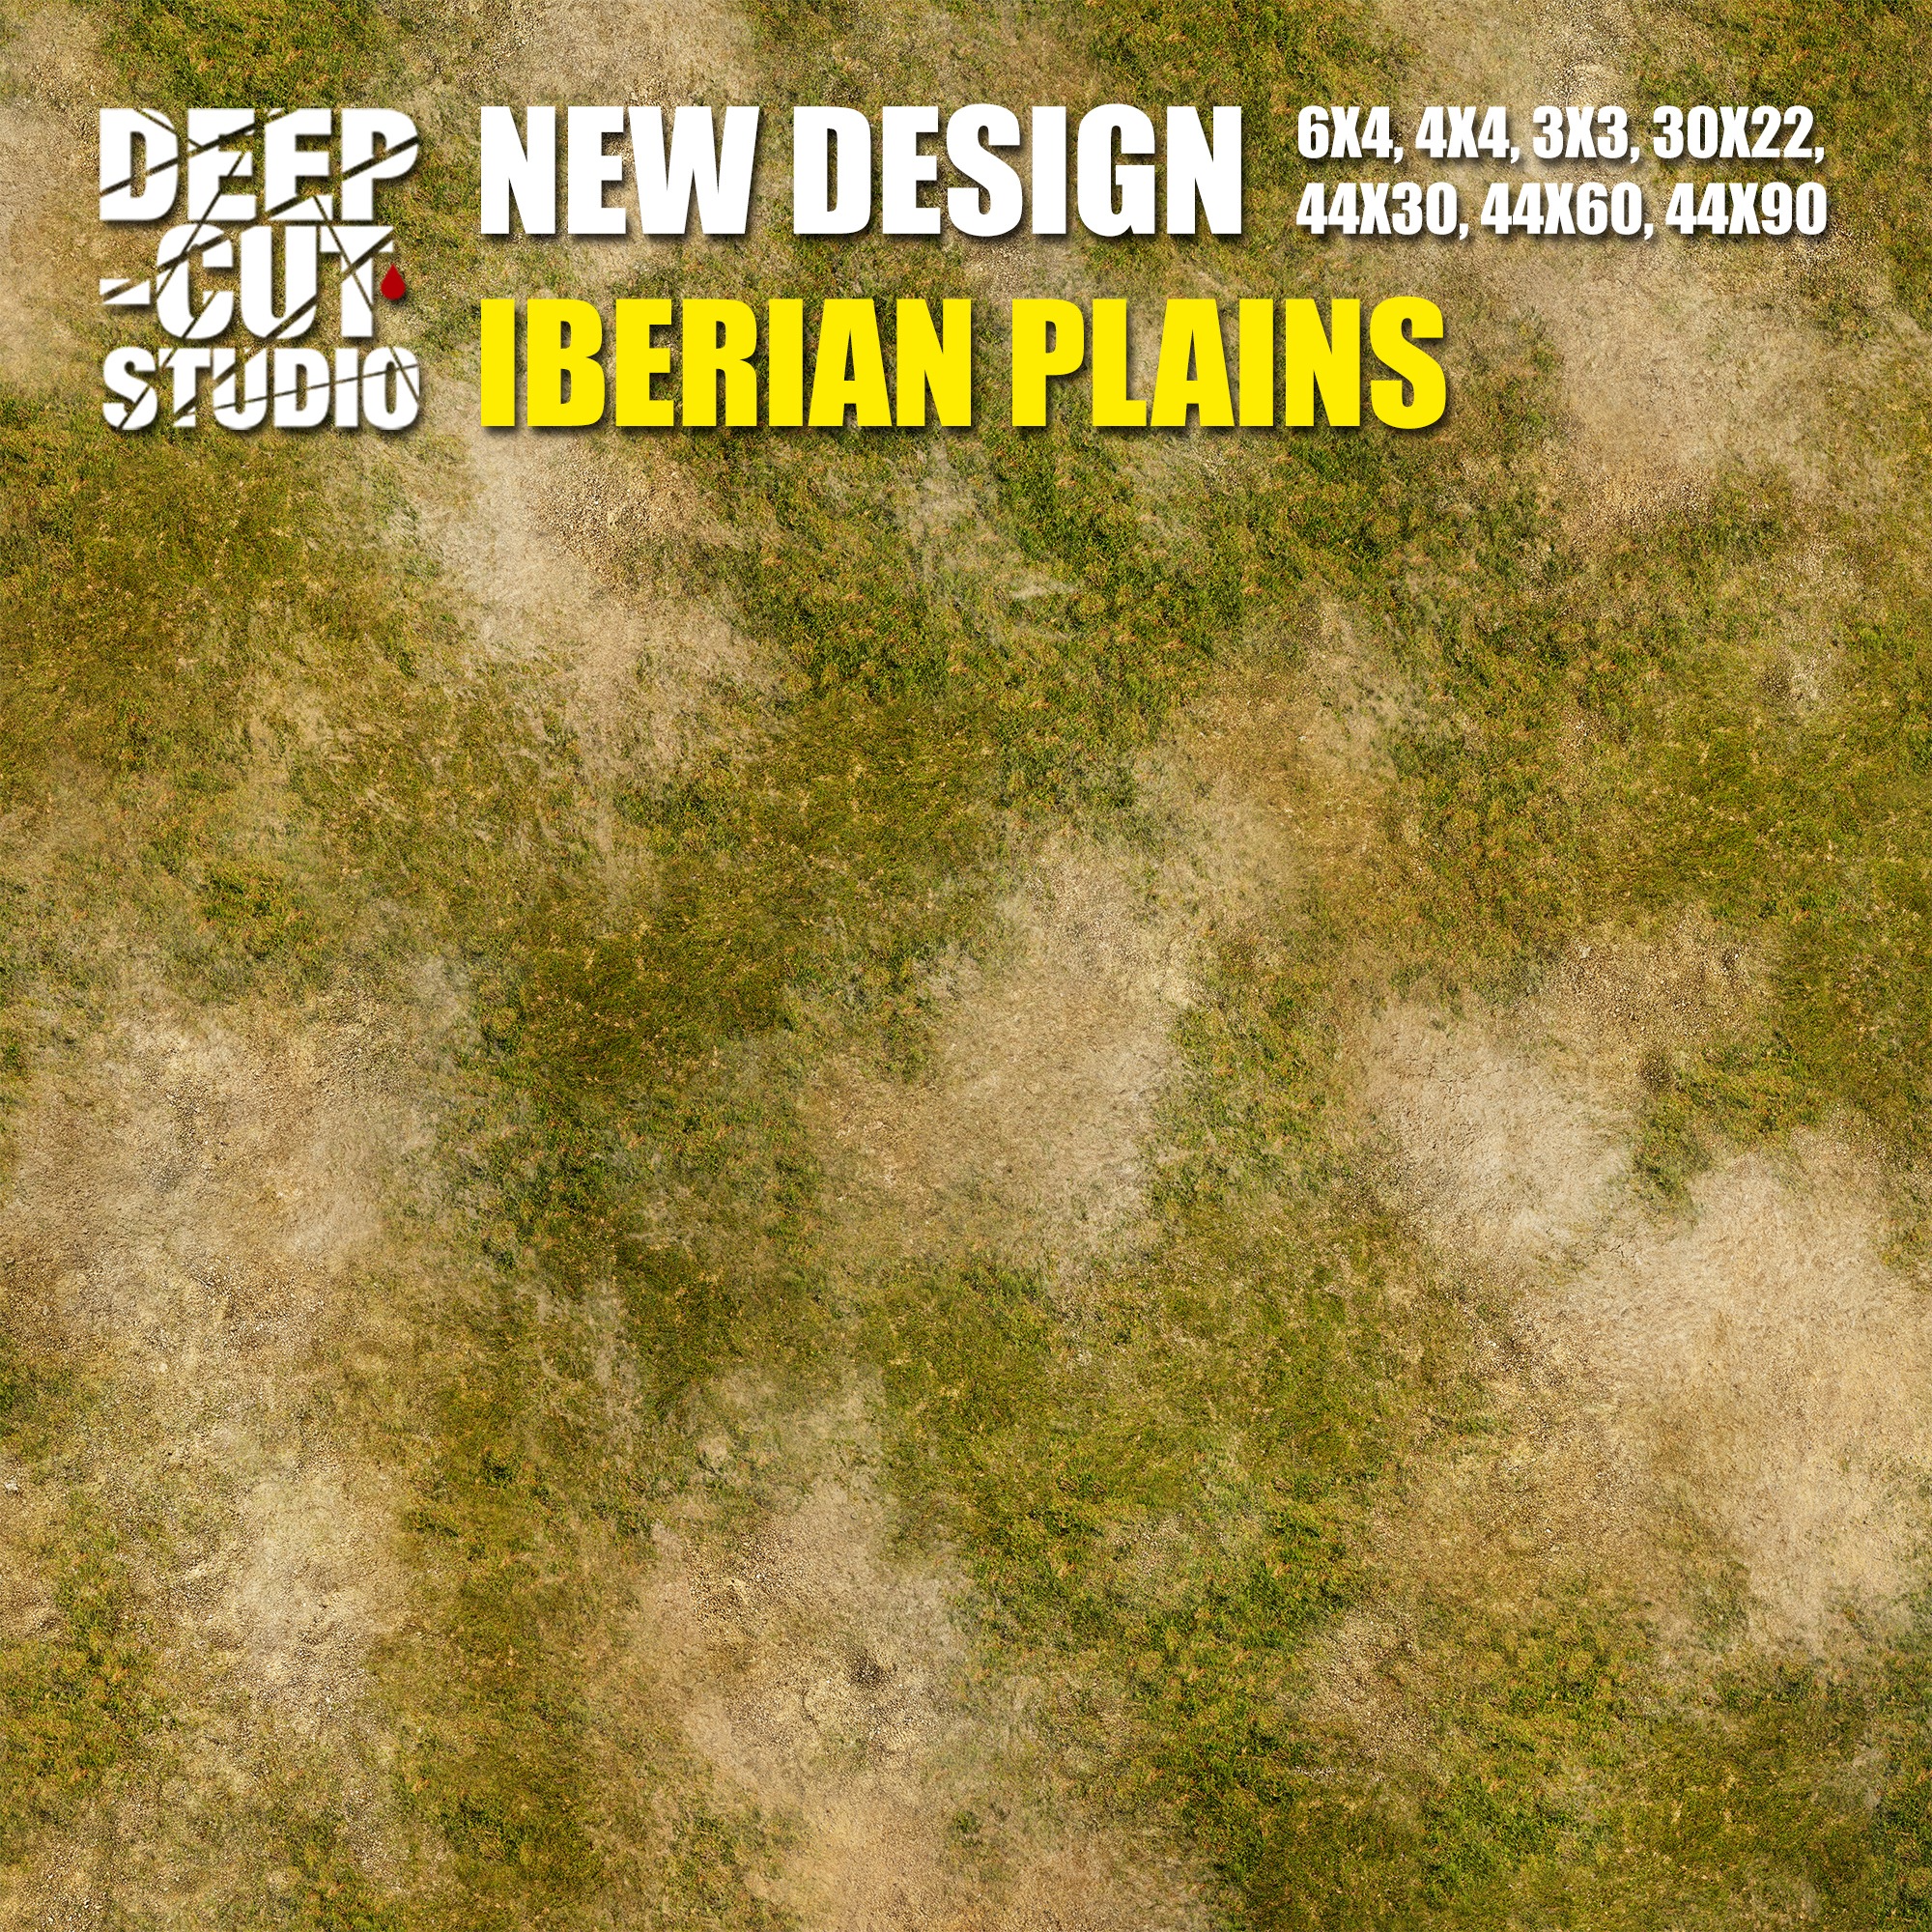 Iberian Plains Gaming Mat Preview - Deep-Cut Studio